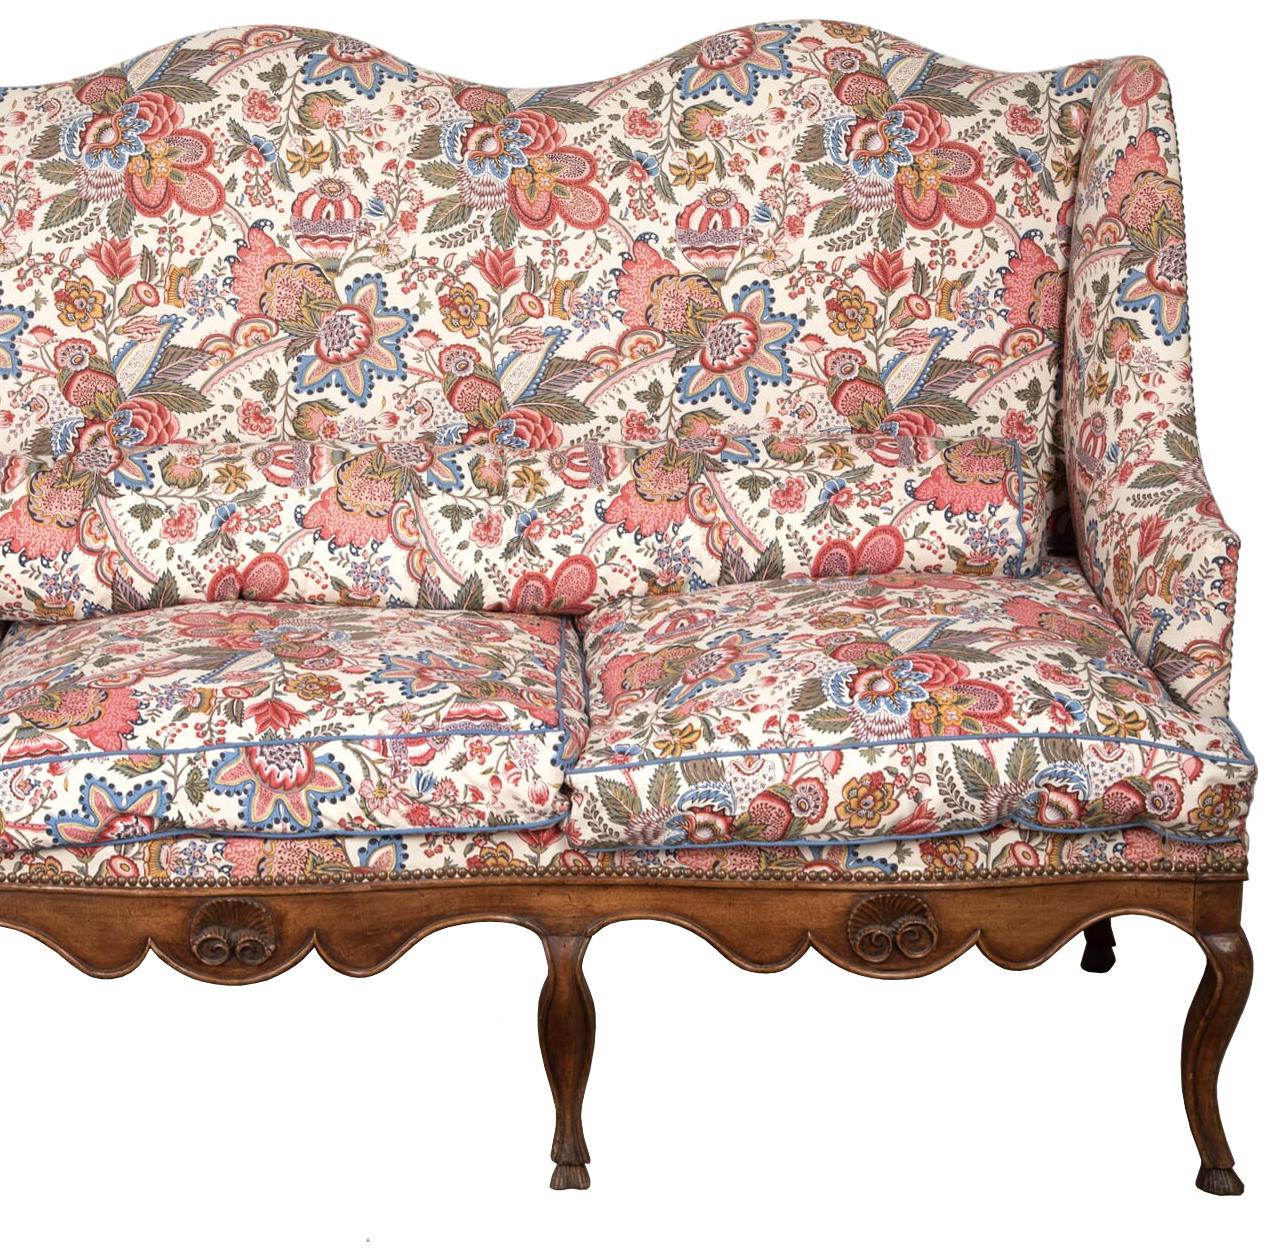 18th Century French Walnut Sofa in Pierre Frey Fabric For Sale 1